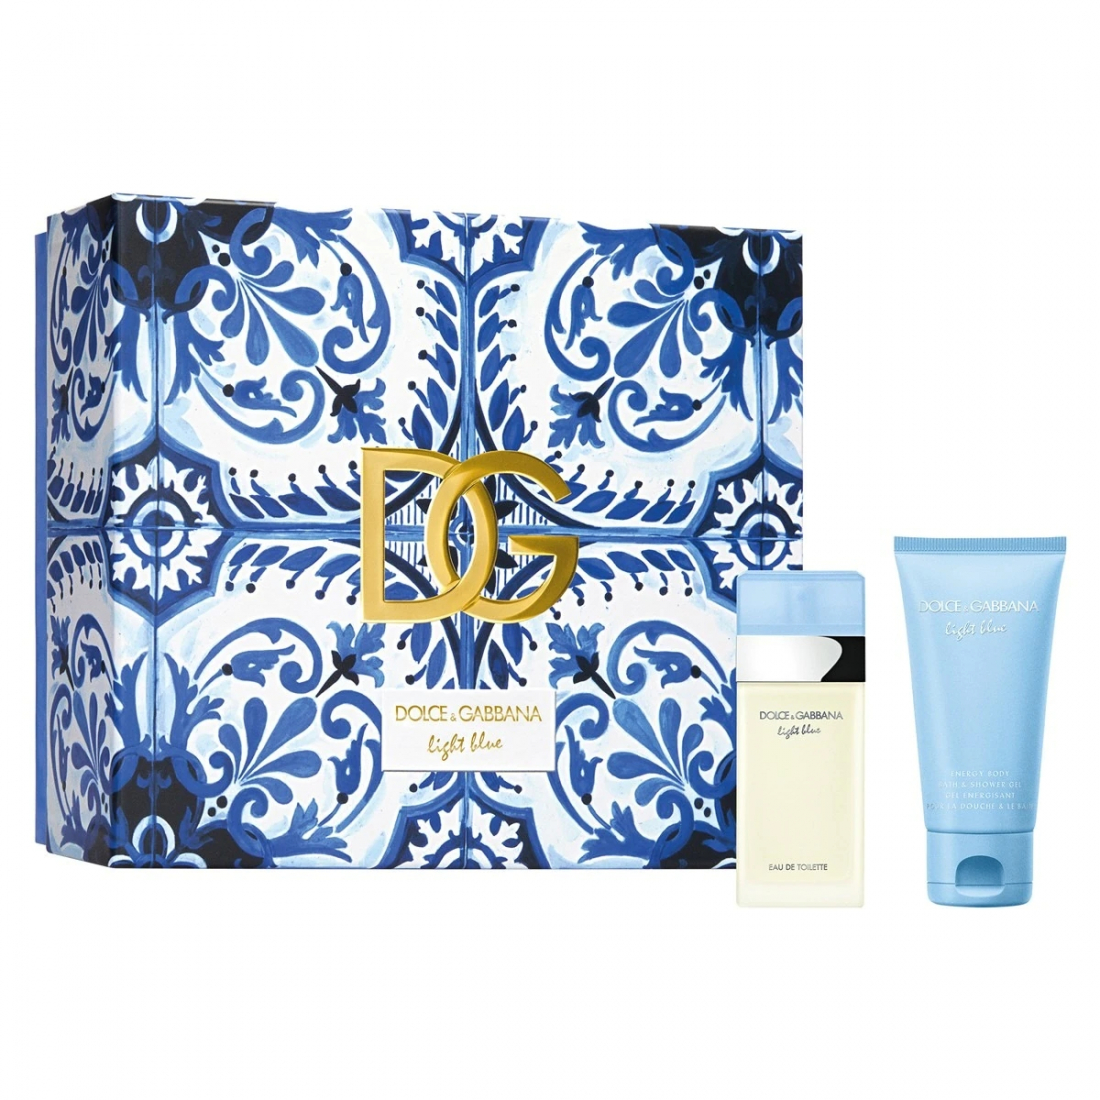 'Light Blue' Perfume Set - 2 Pieces